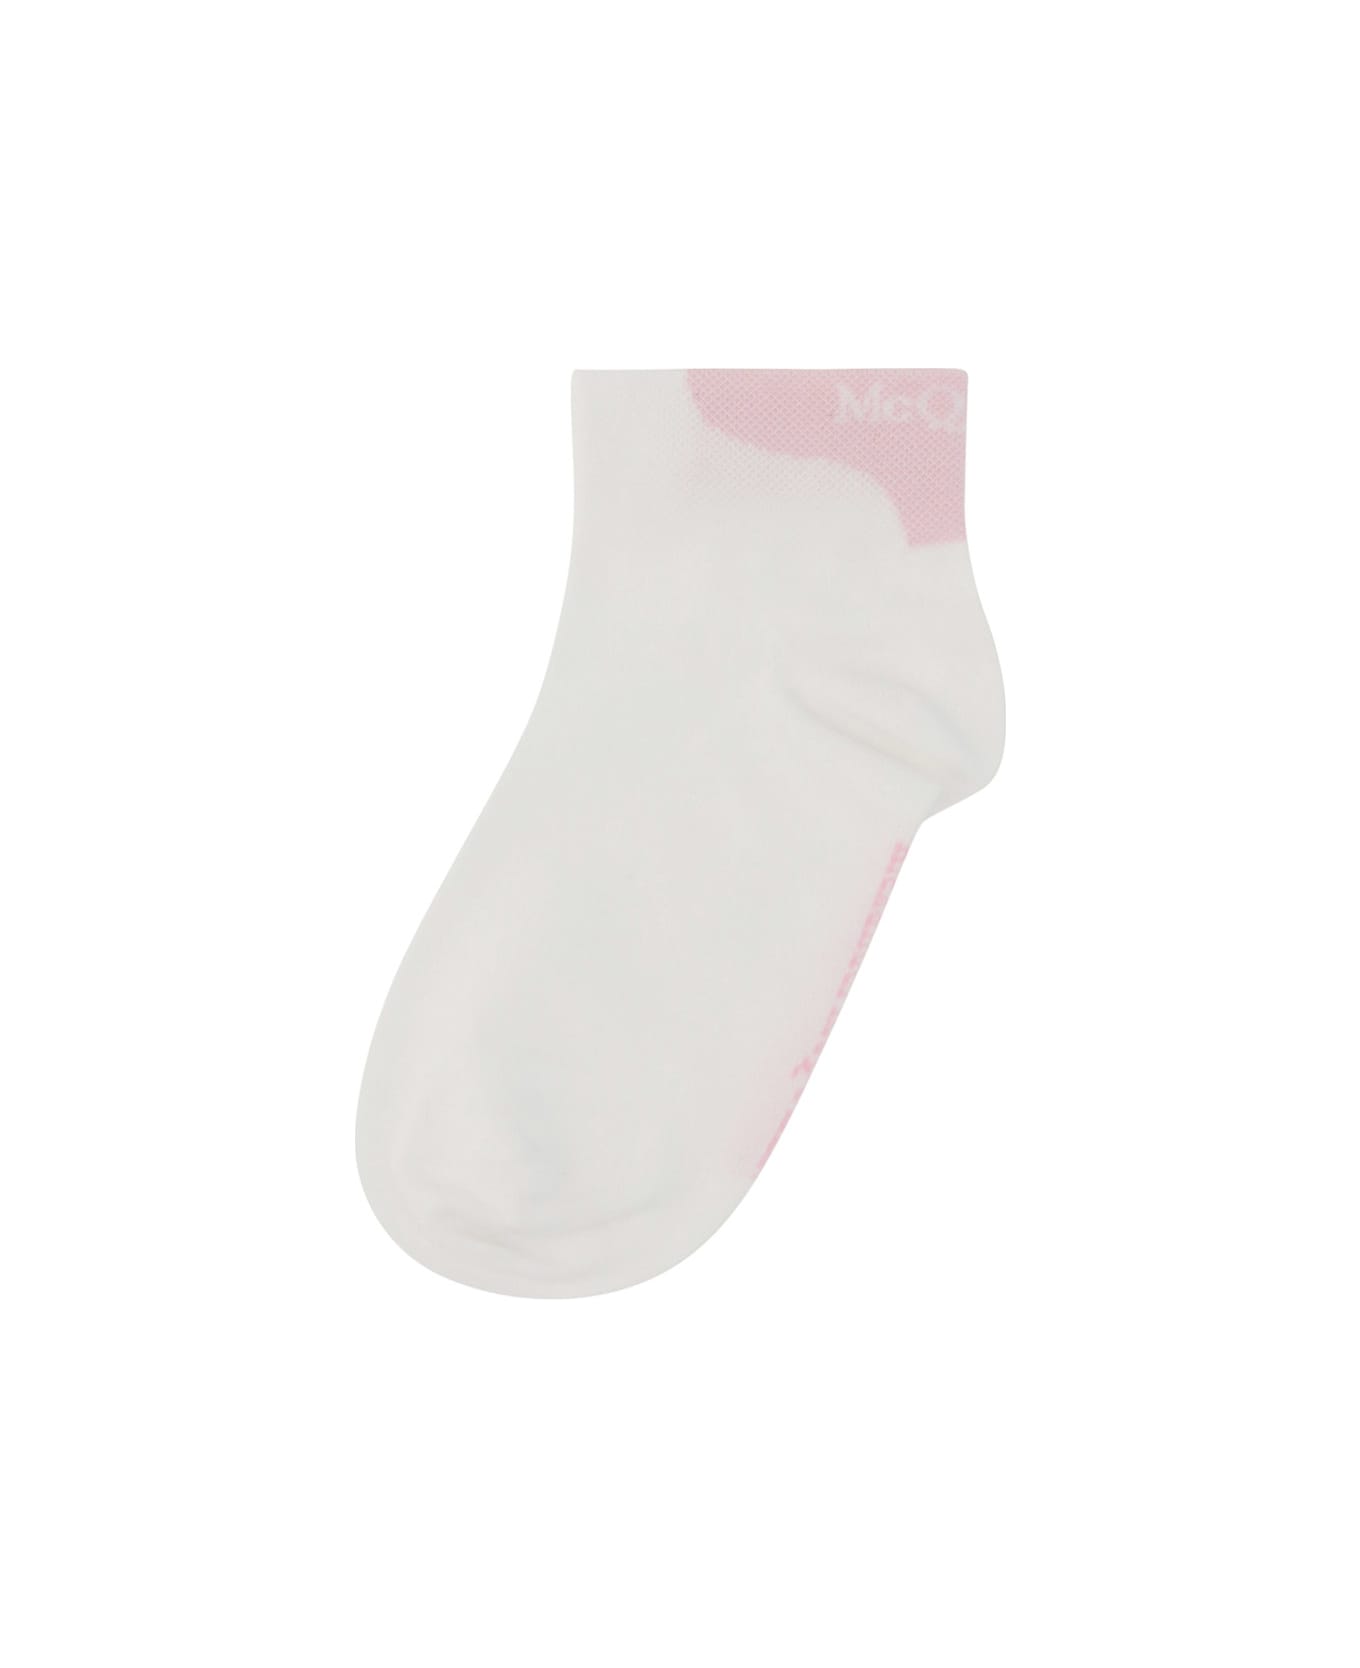 Alexander McQueen Socks - White/pink